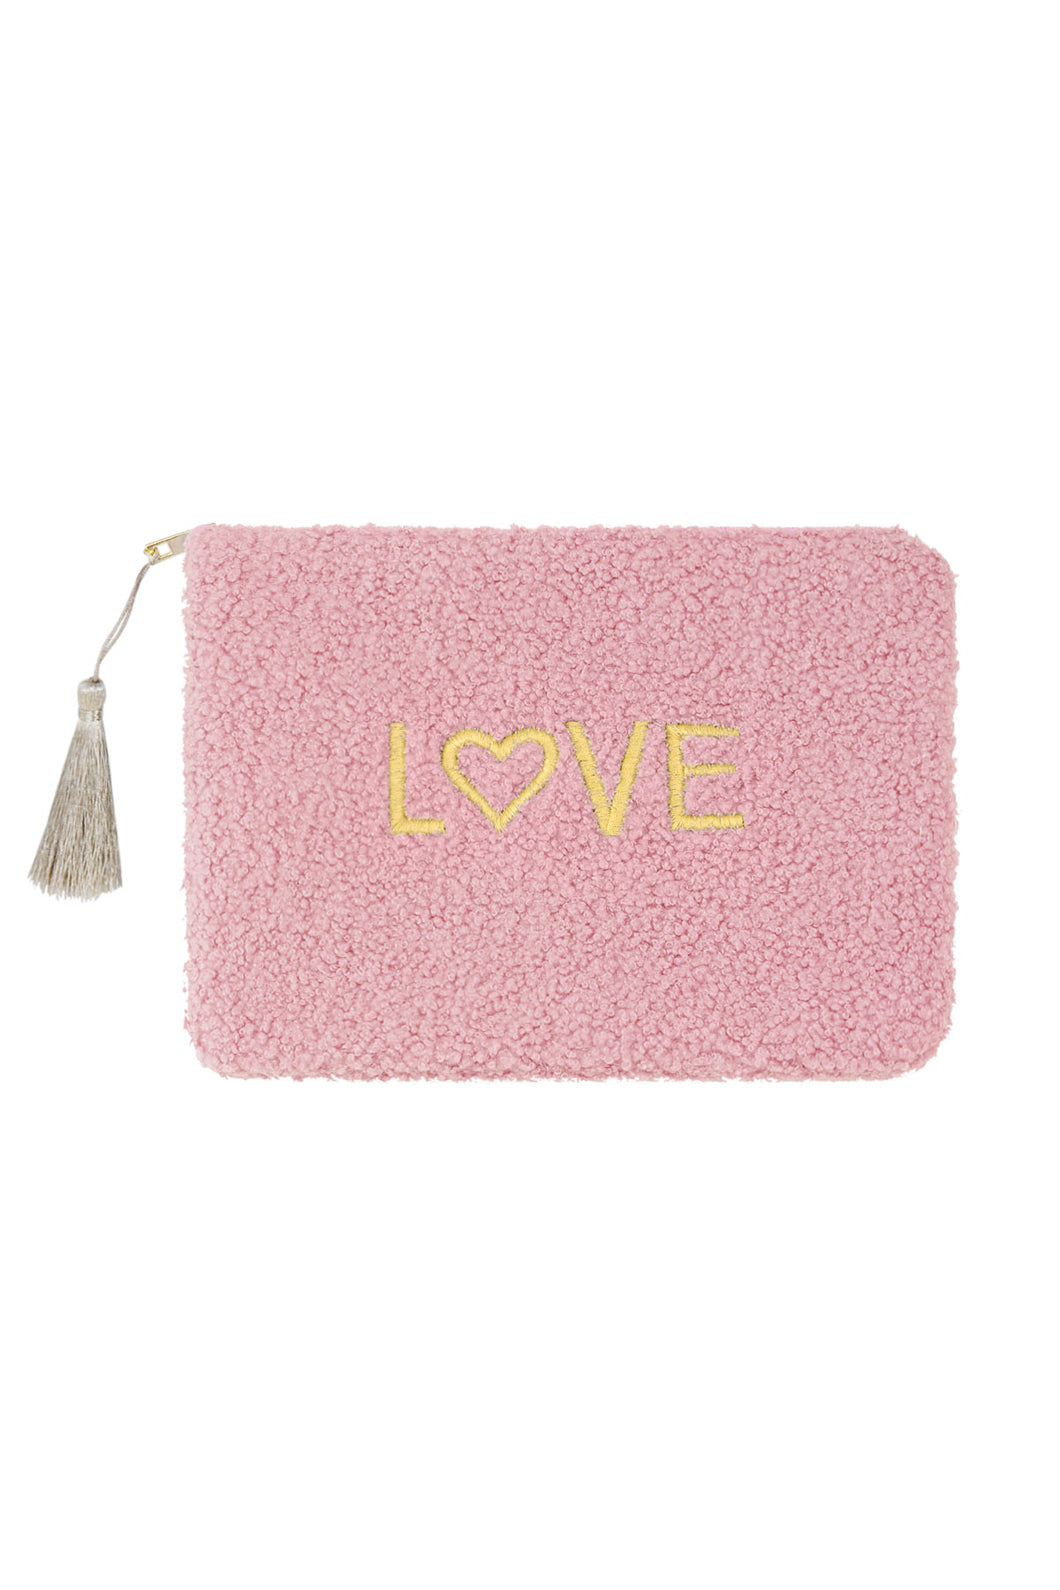 Love Teddy Make-Up Bag - pink